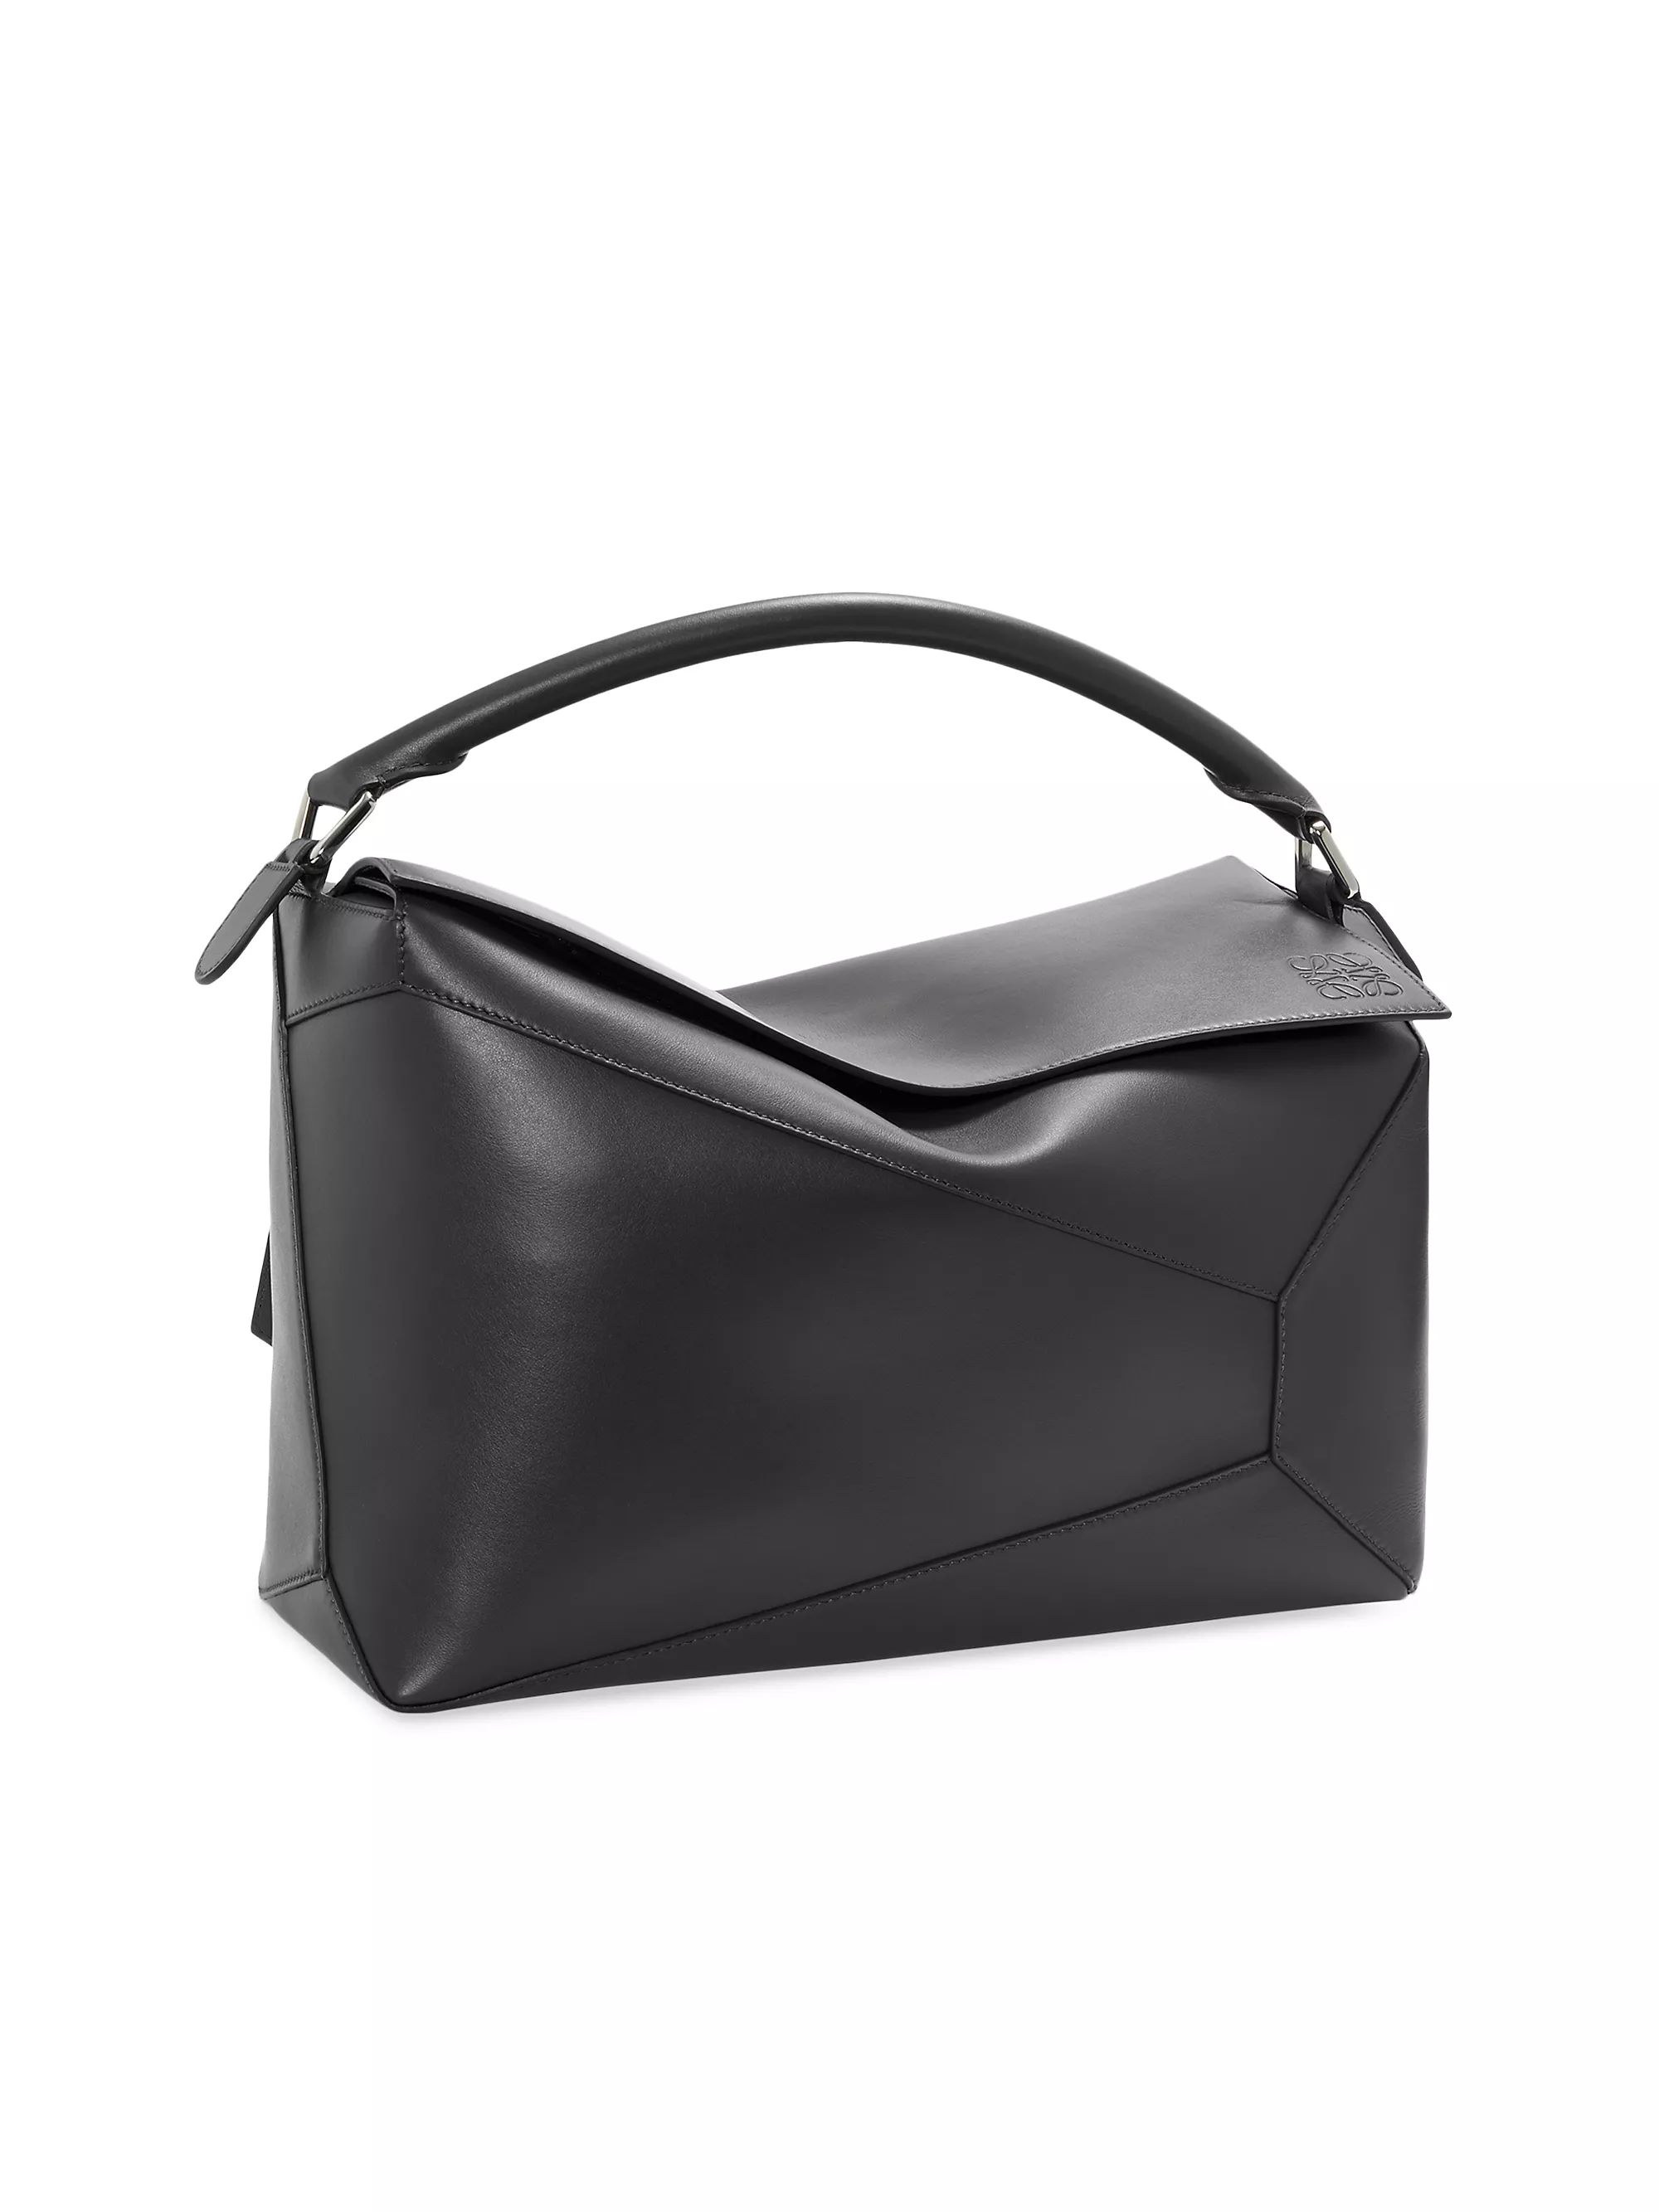 AccessoriesBelt Bags & PouchesLOEWEPuzzle Edge Leather Shoulder Bag$4,100
            
          ... | Saks Fifth Avenue